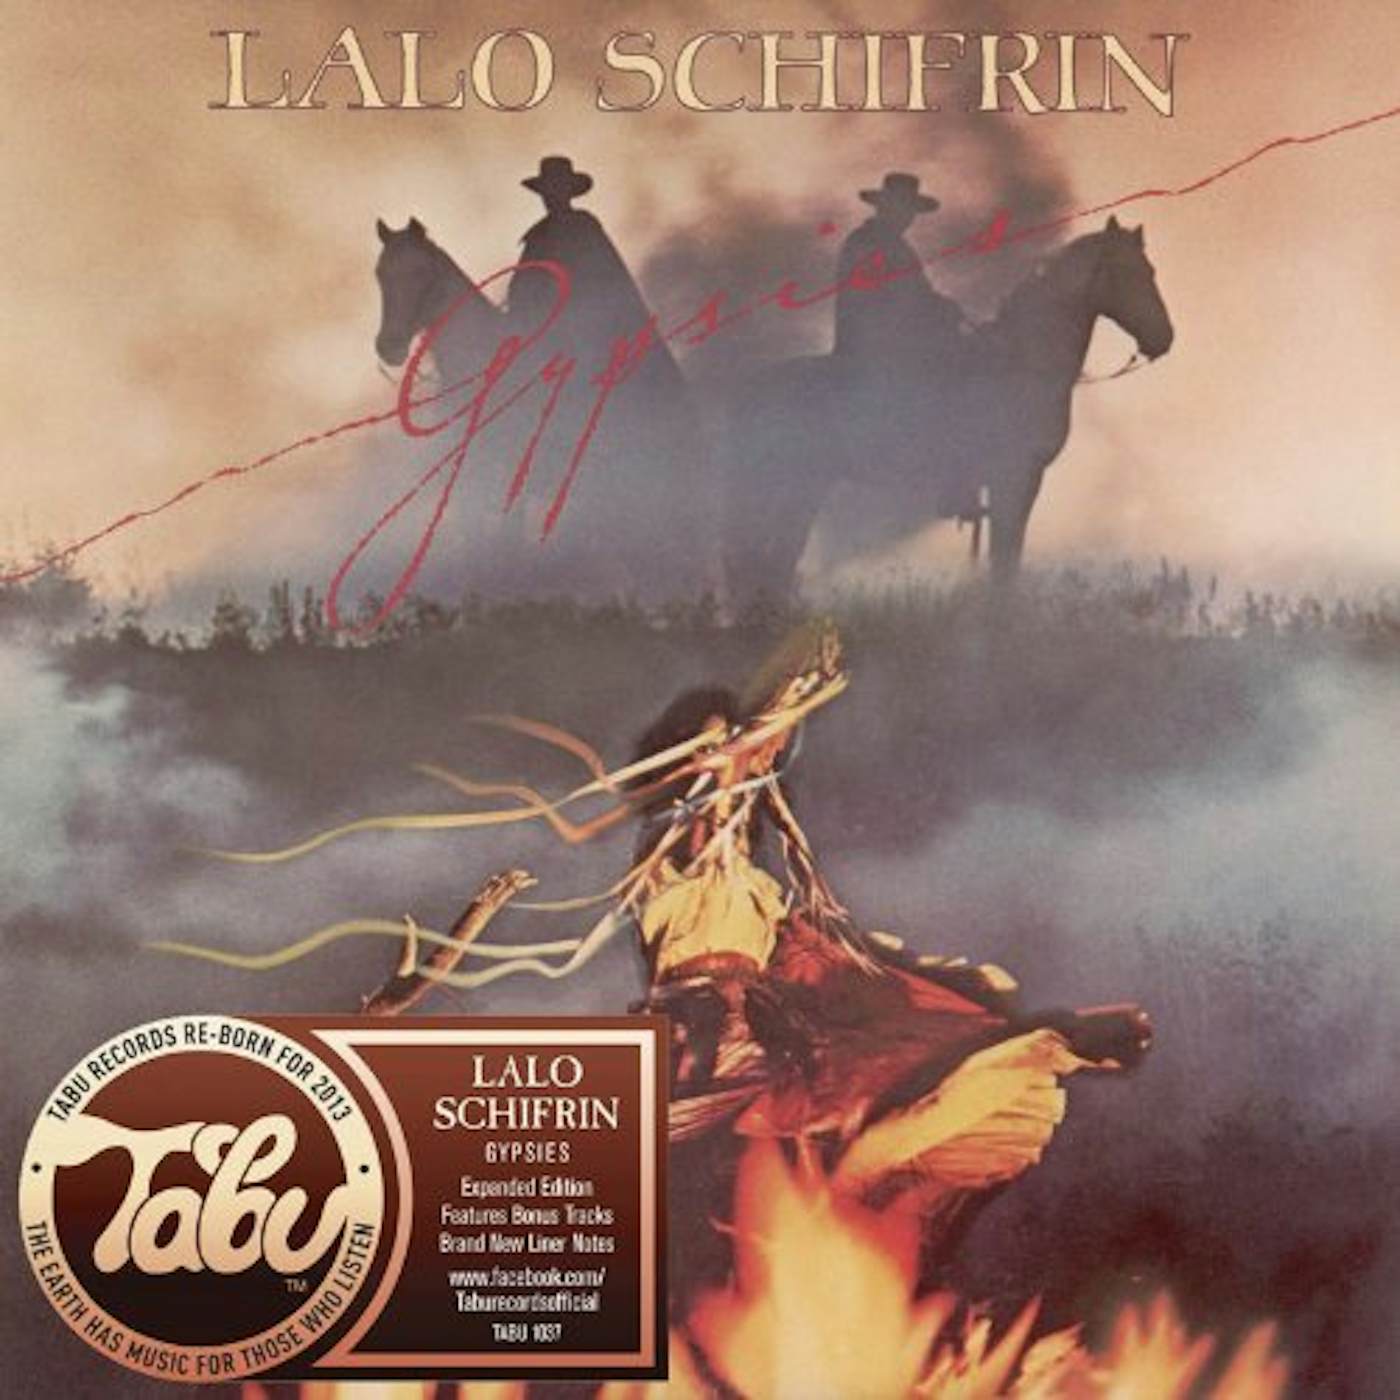 Lalo Schifrin GYPSIES CD